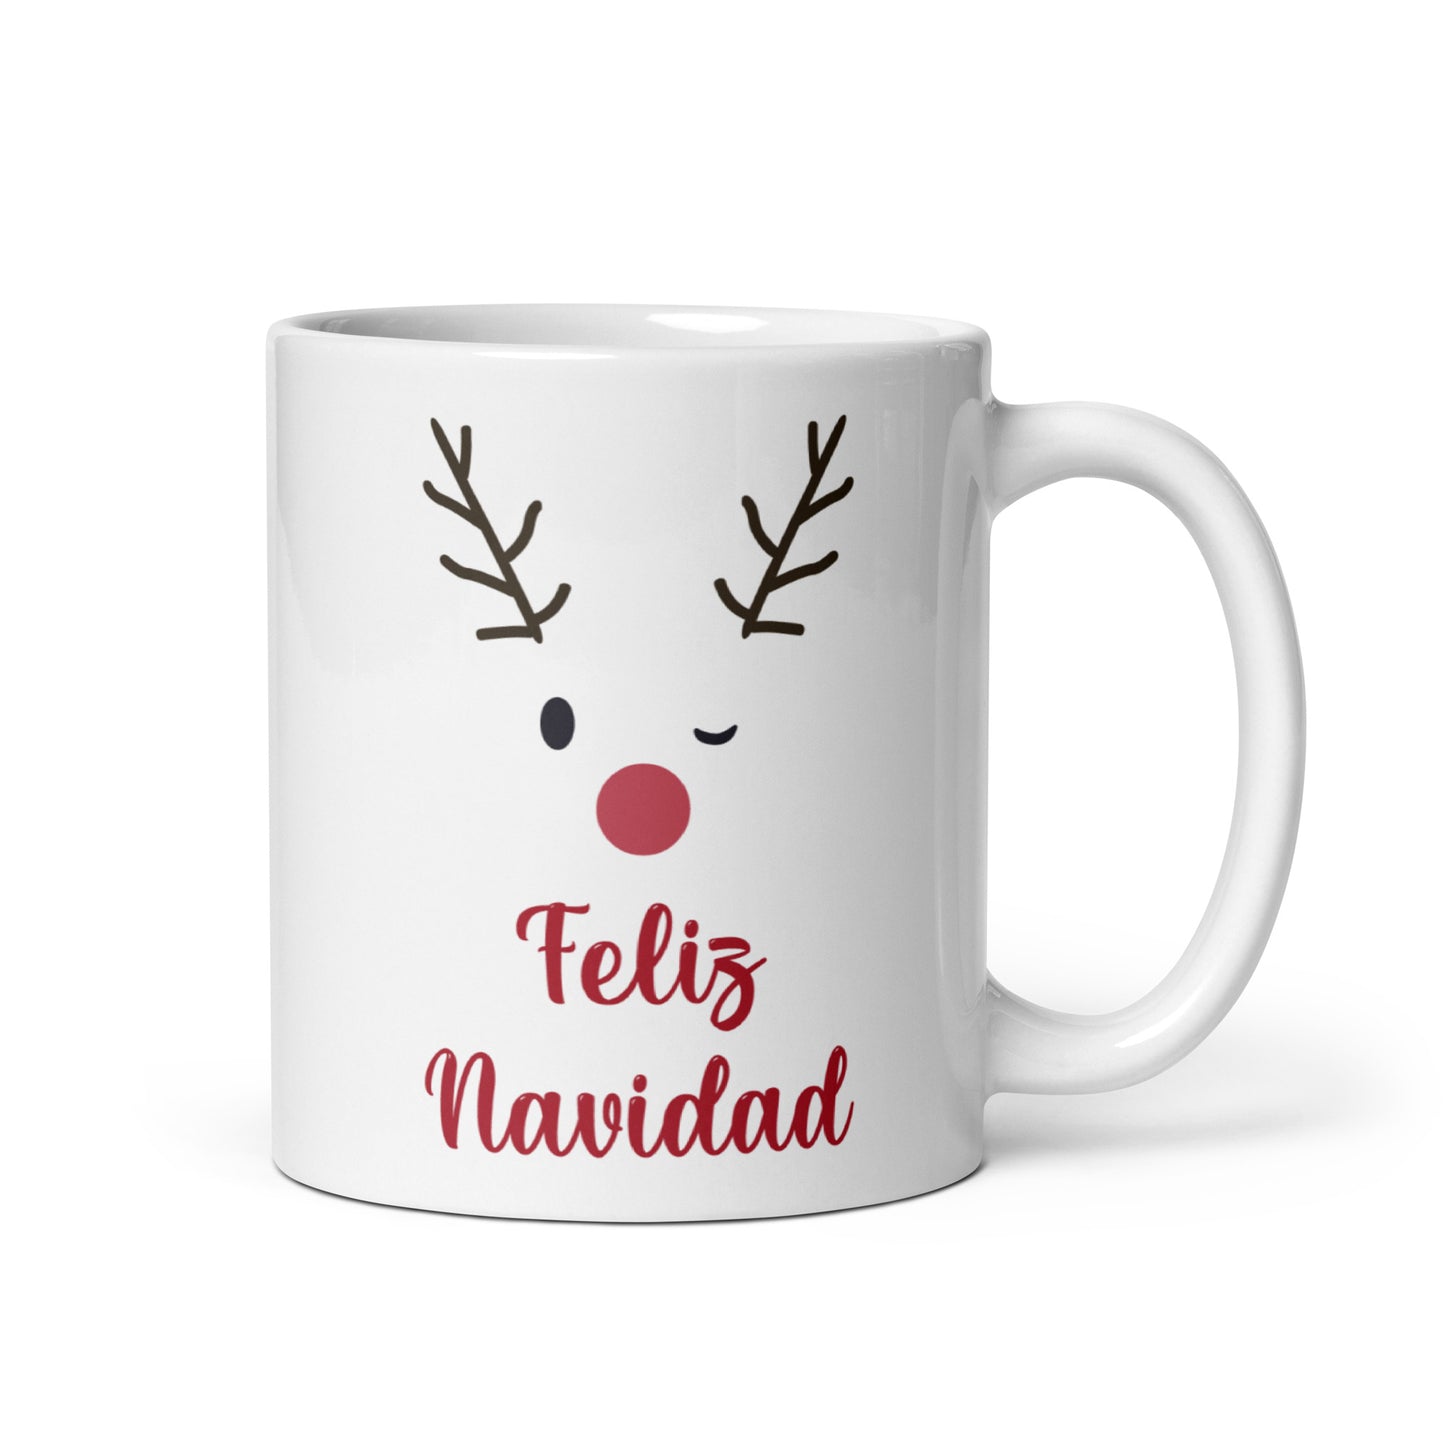 Rudolph the Reindeer Merry Christmas Mug